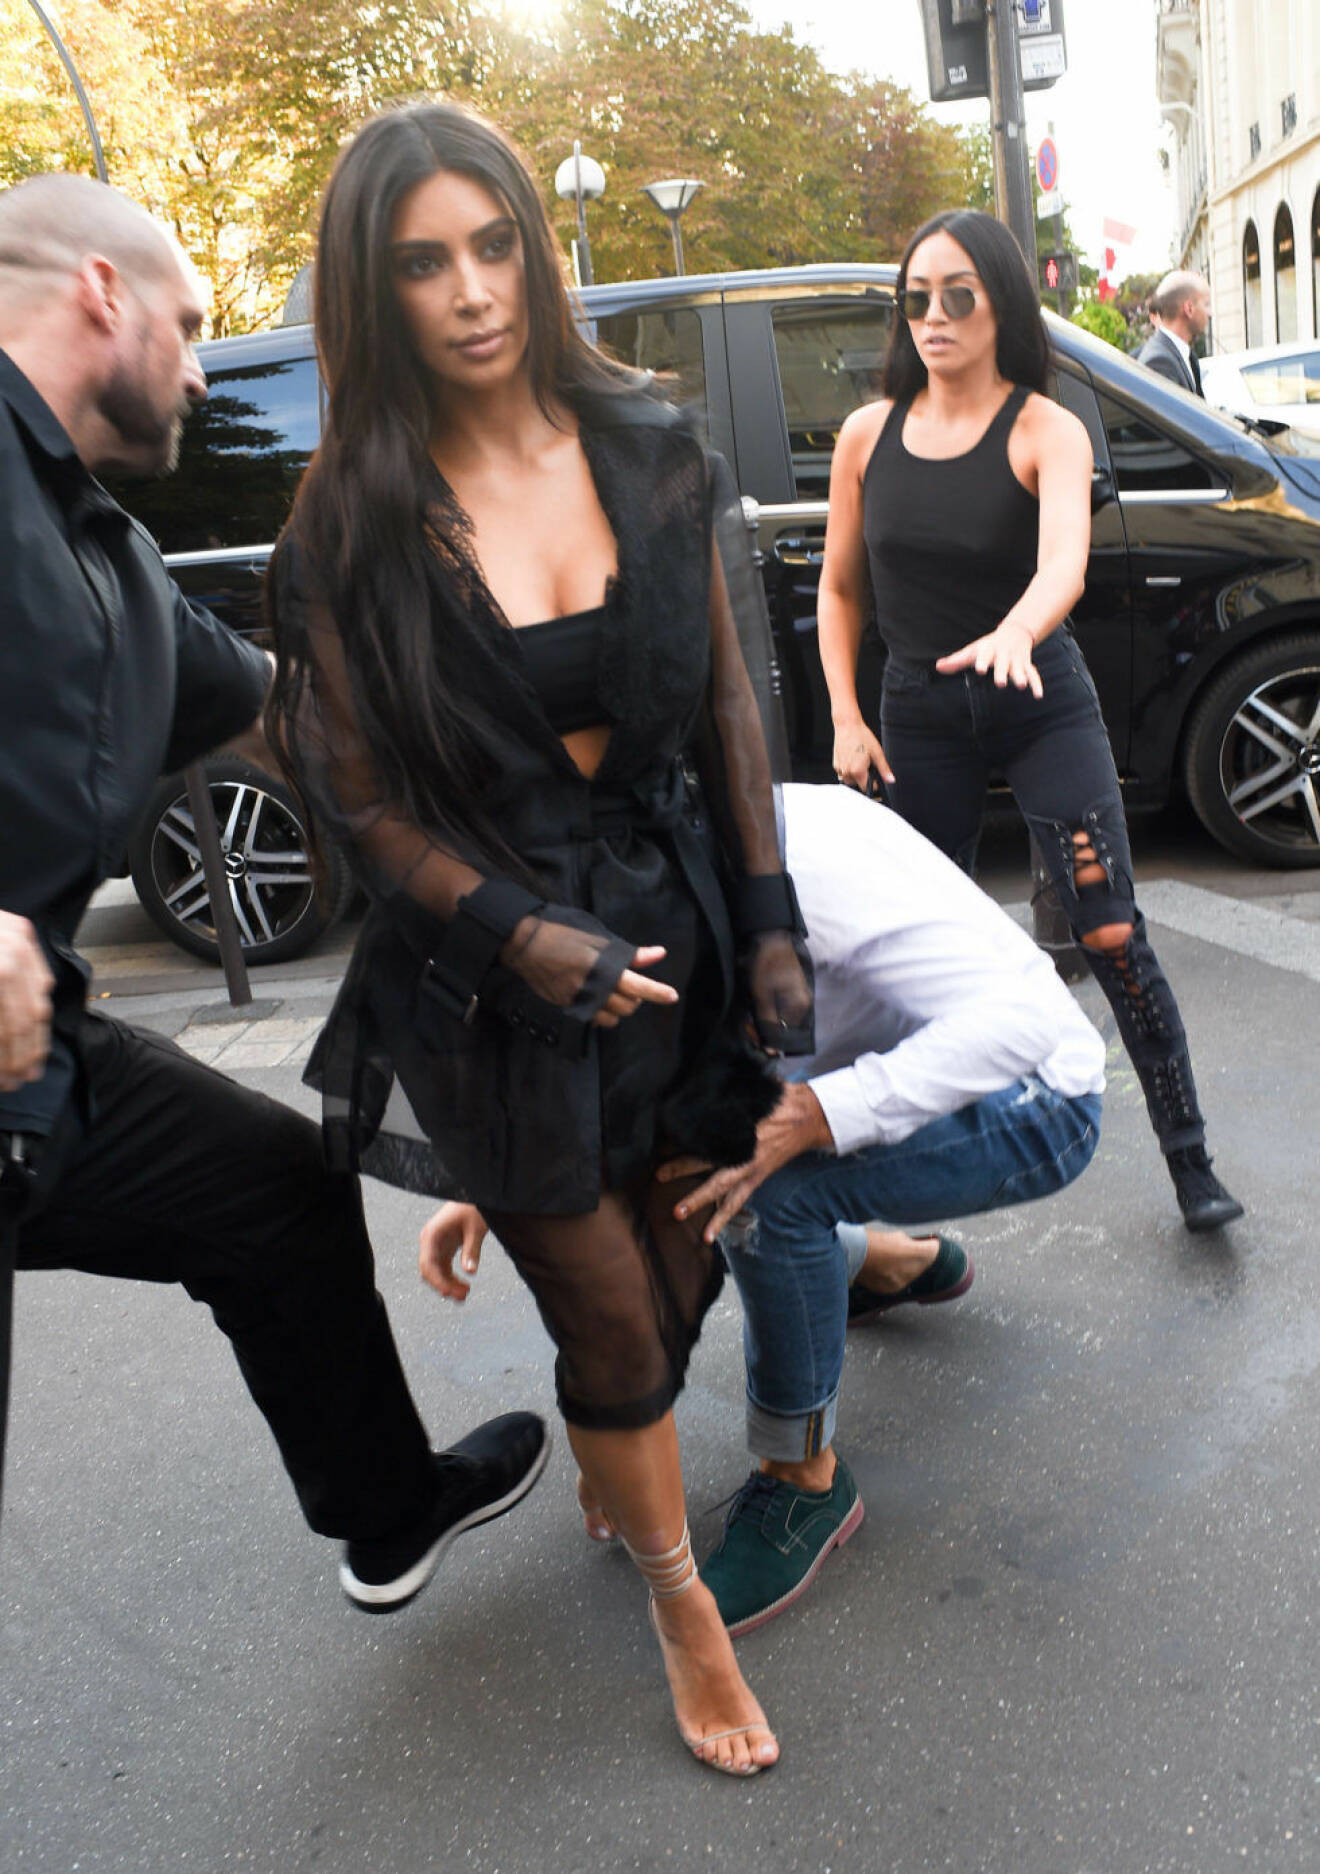 Celebrity pranker Vitalii Sediuk strikes again, this time grabbing Kim Kardashian at LAvenue restaurant in Paris